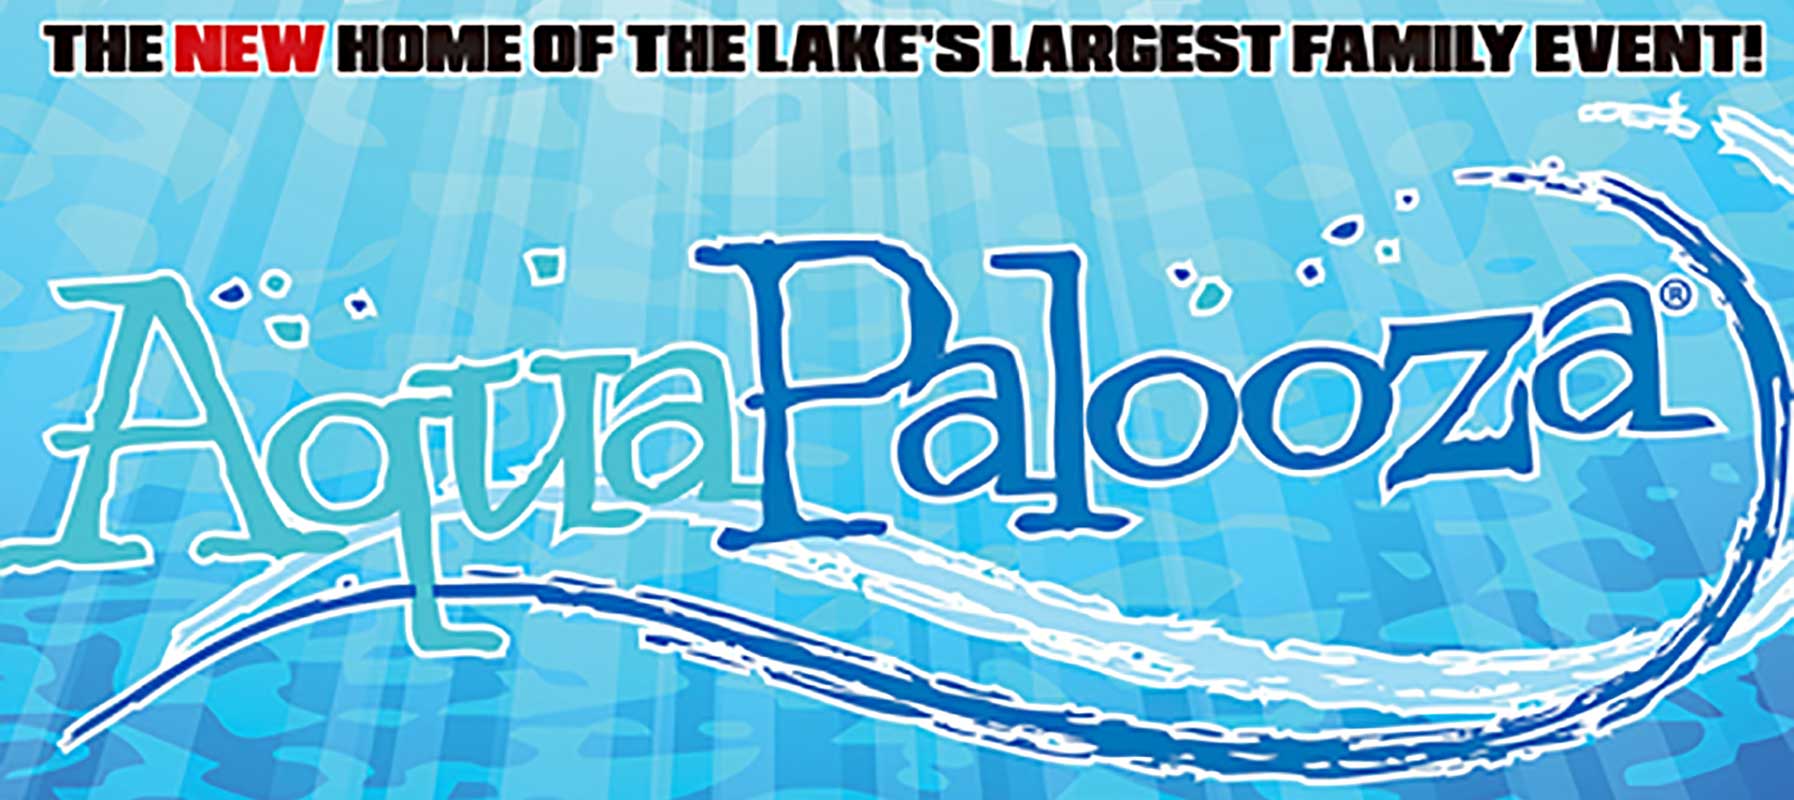 Aquapalooza Lake of the Ozarks Lake of the Ozarks Midwest lake